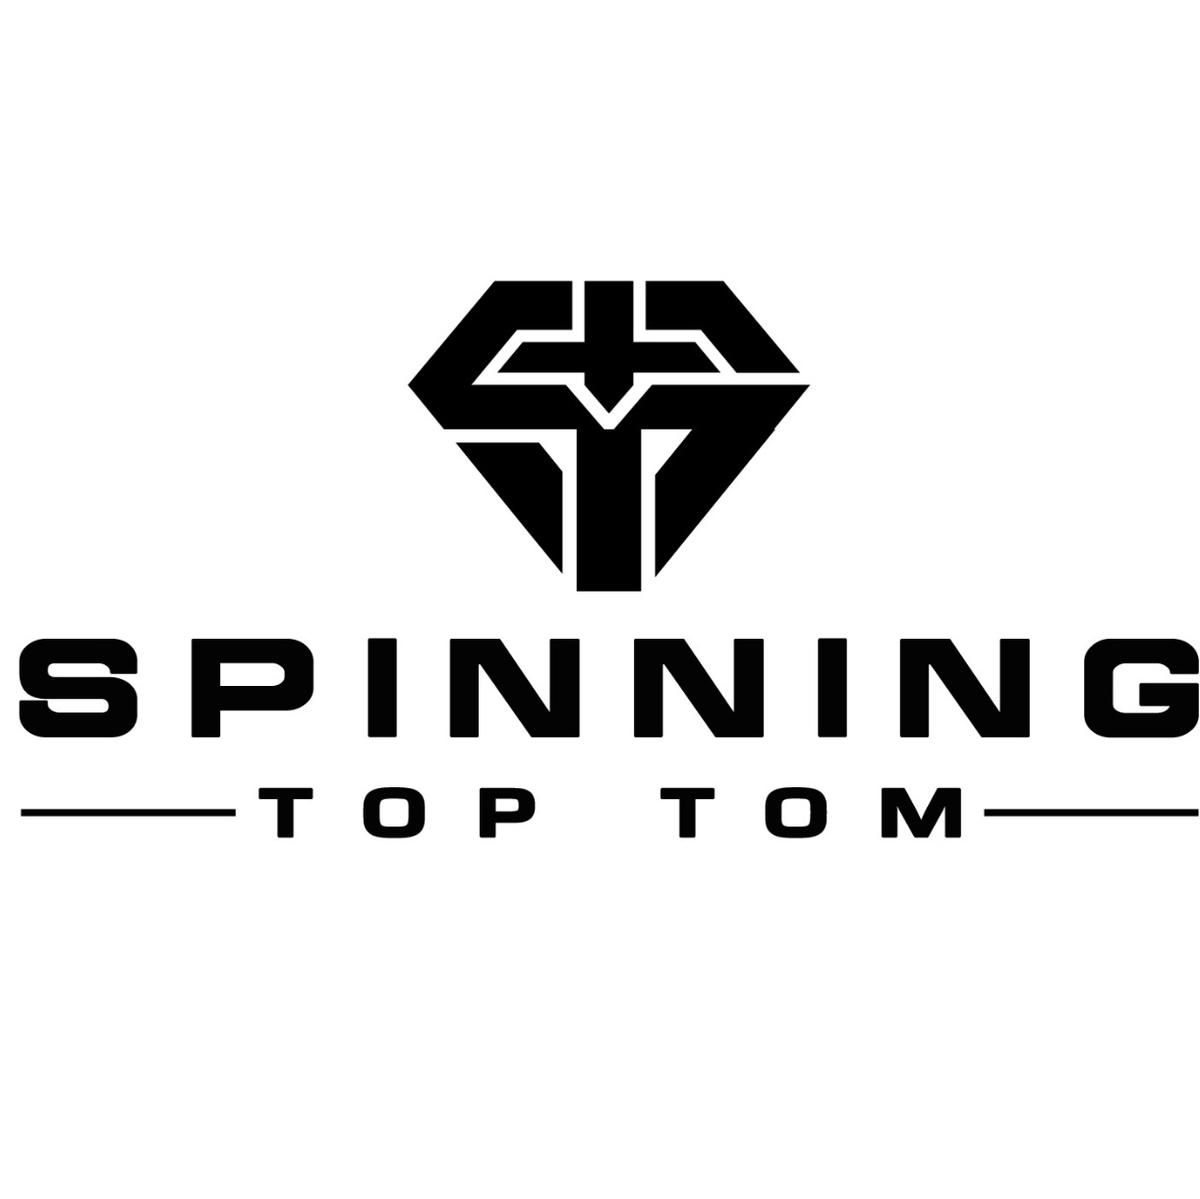 SpinningTopTom's images